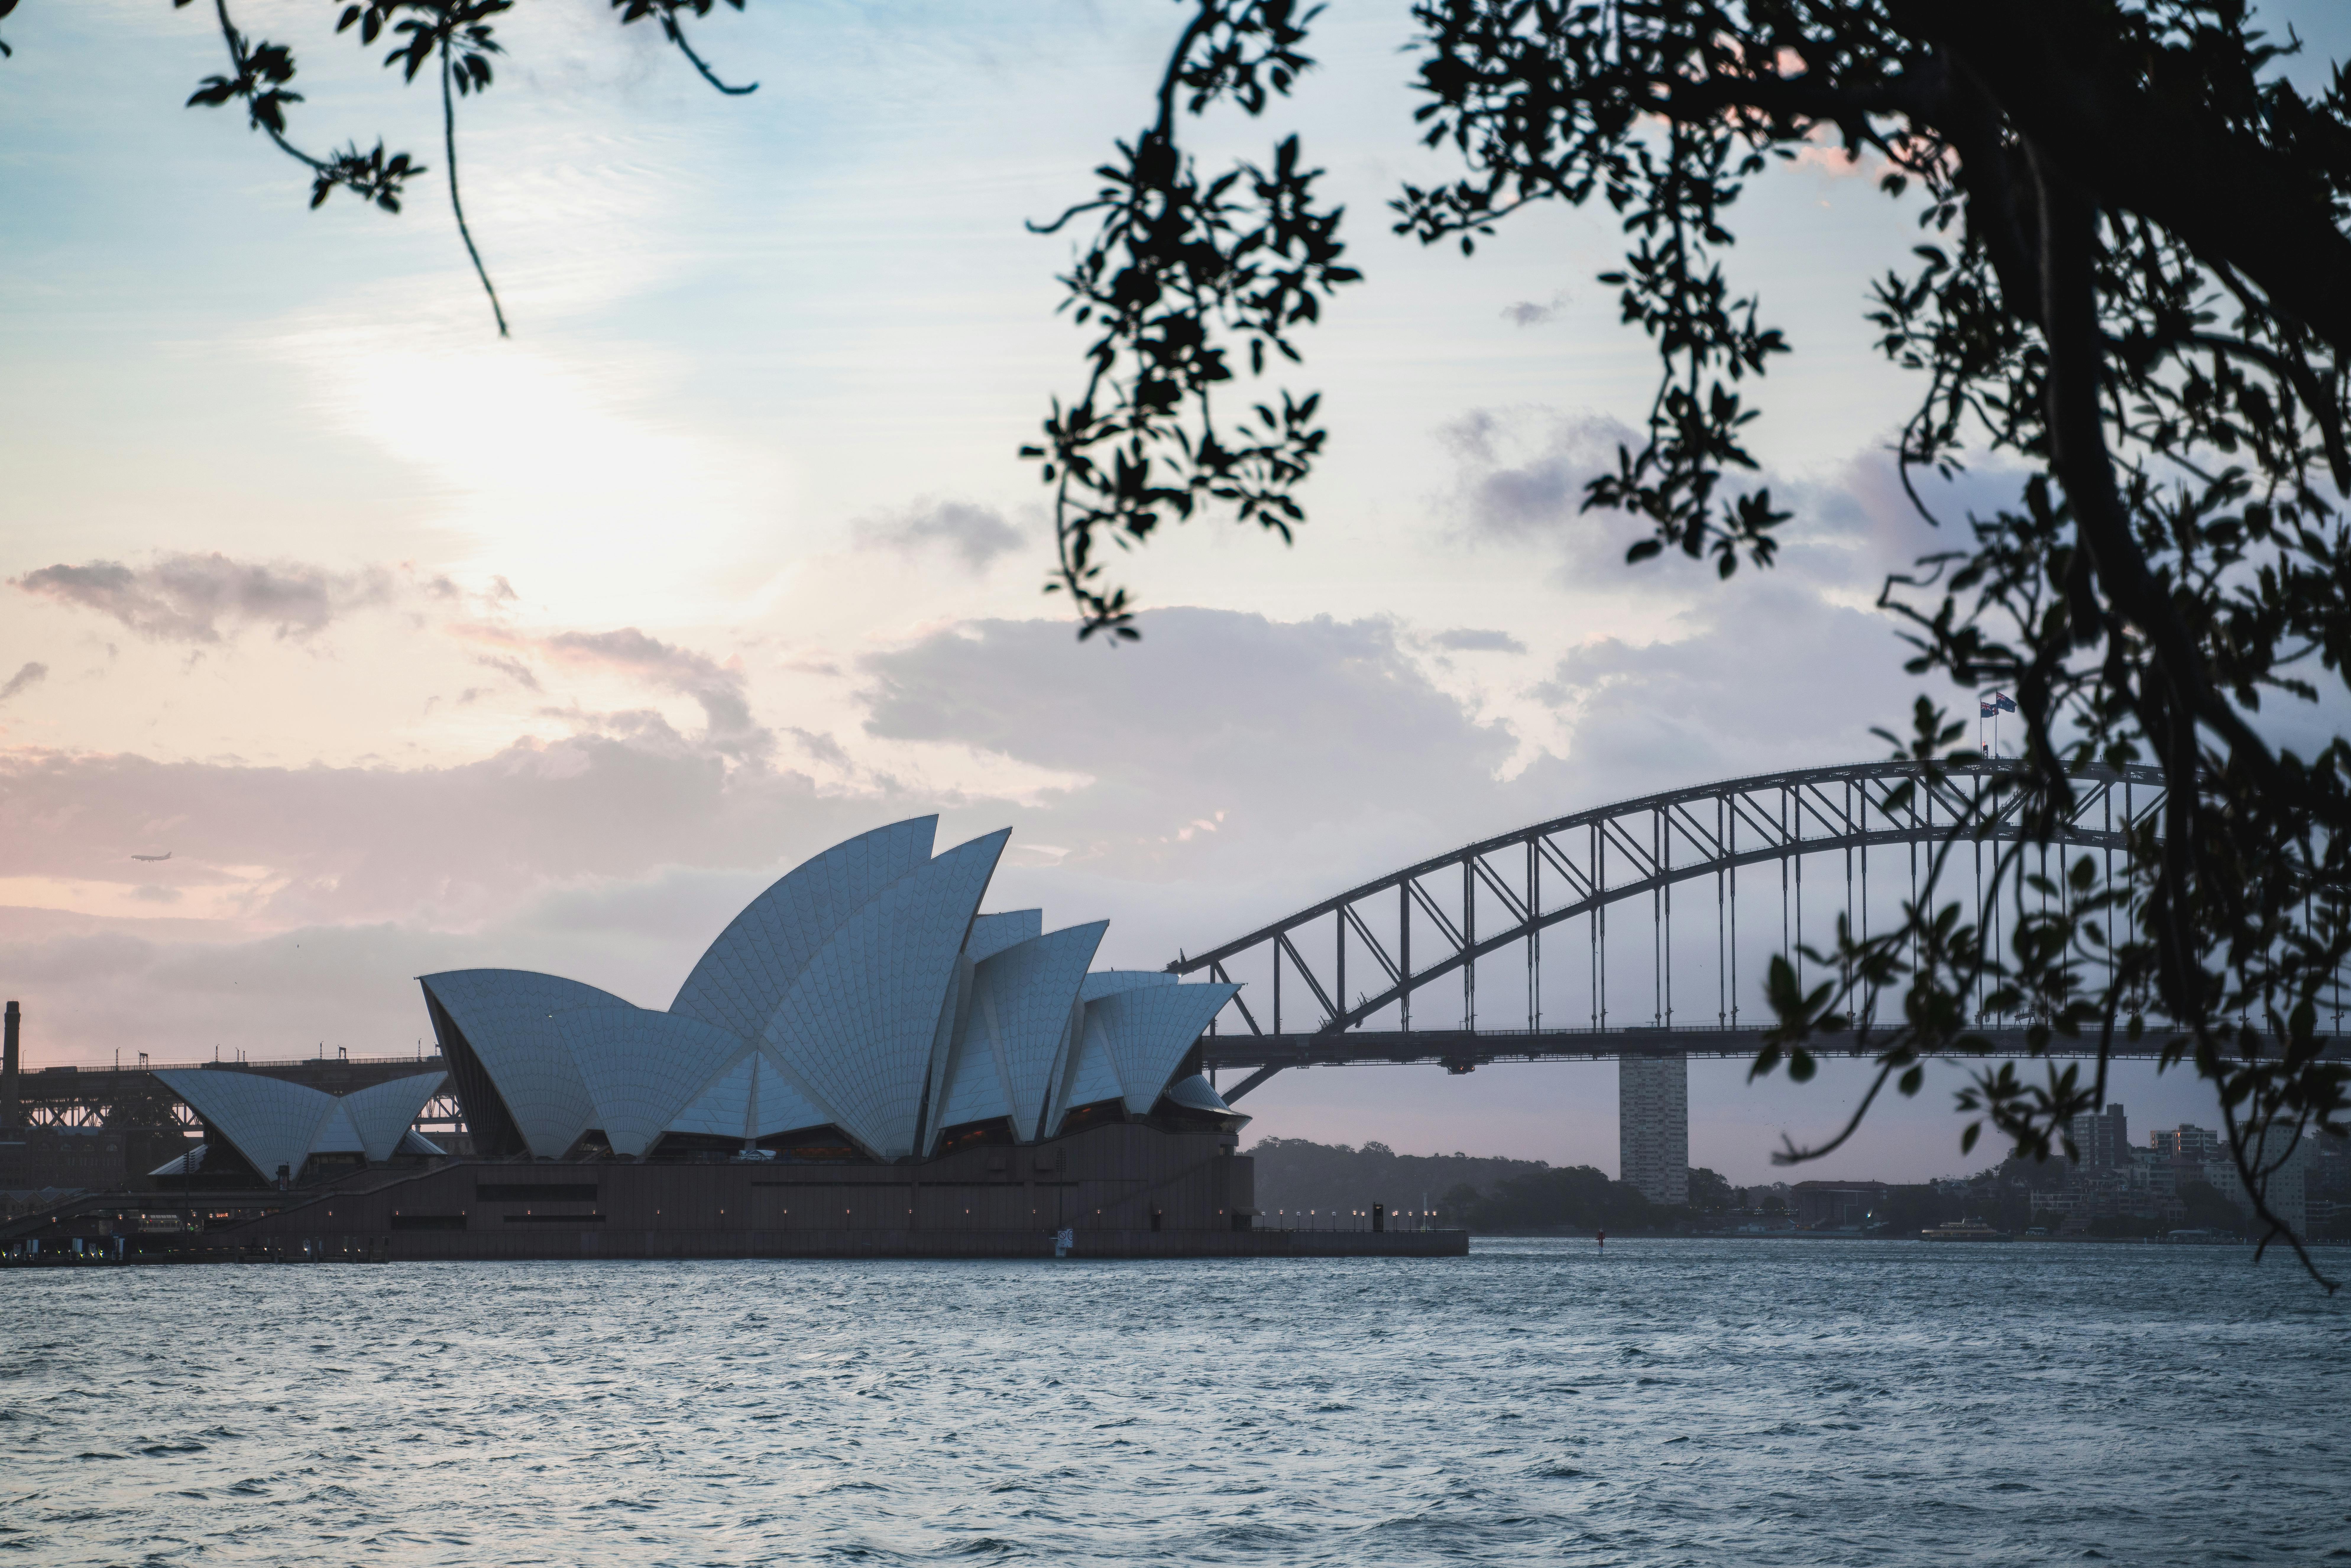 scenery of famous sydney opera house and bridge in twilight